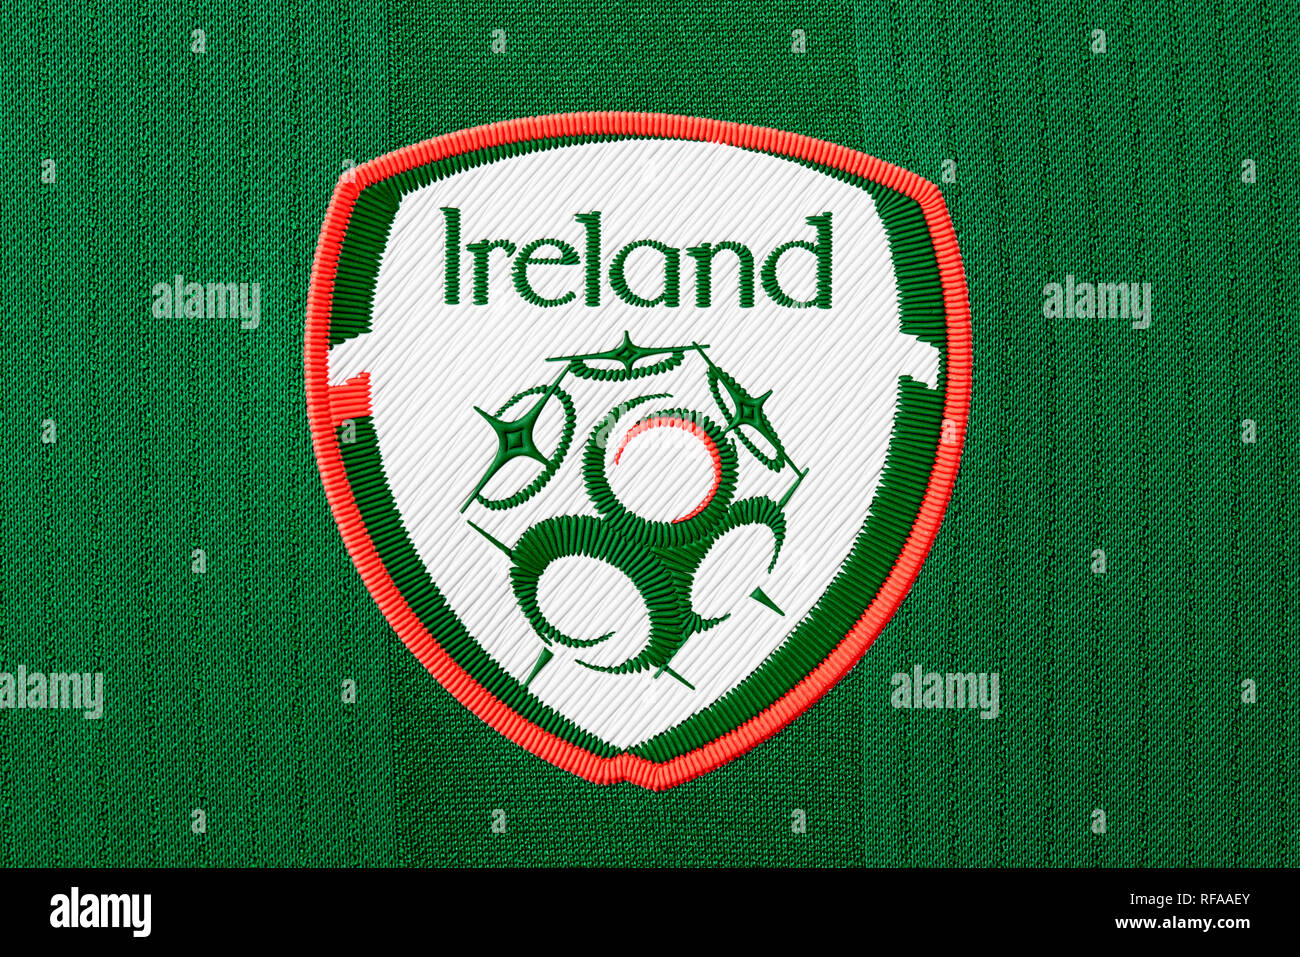 ireland national football team jersey